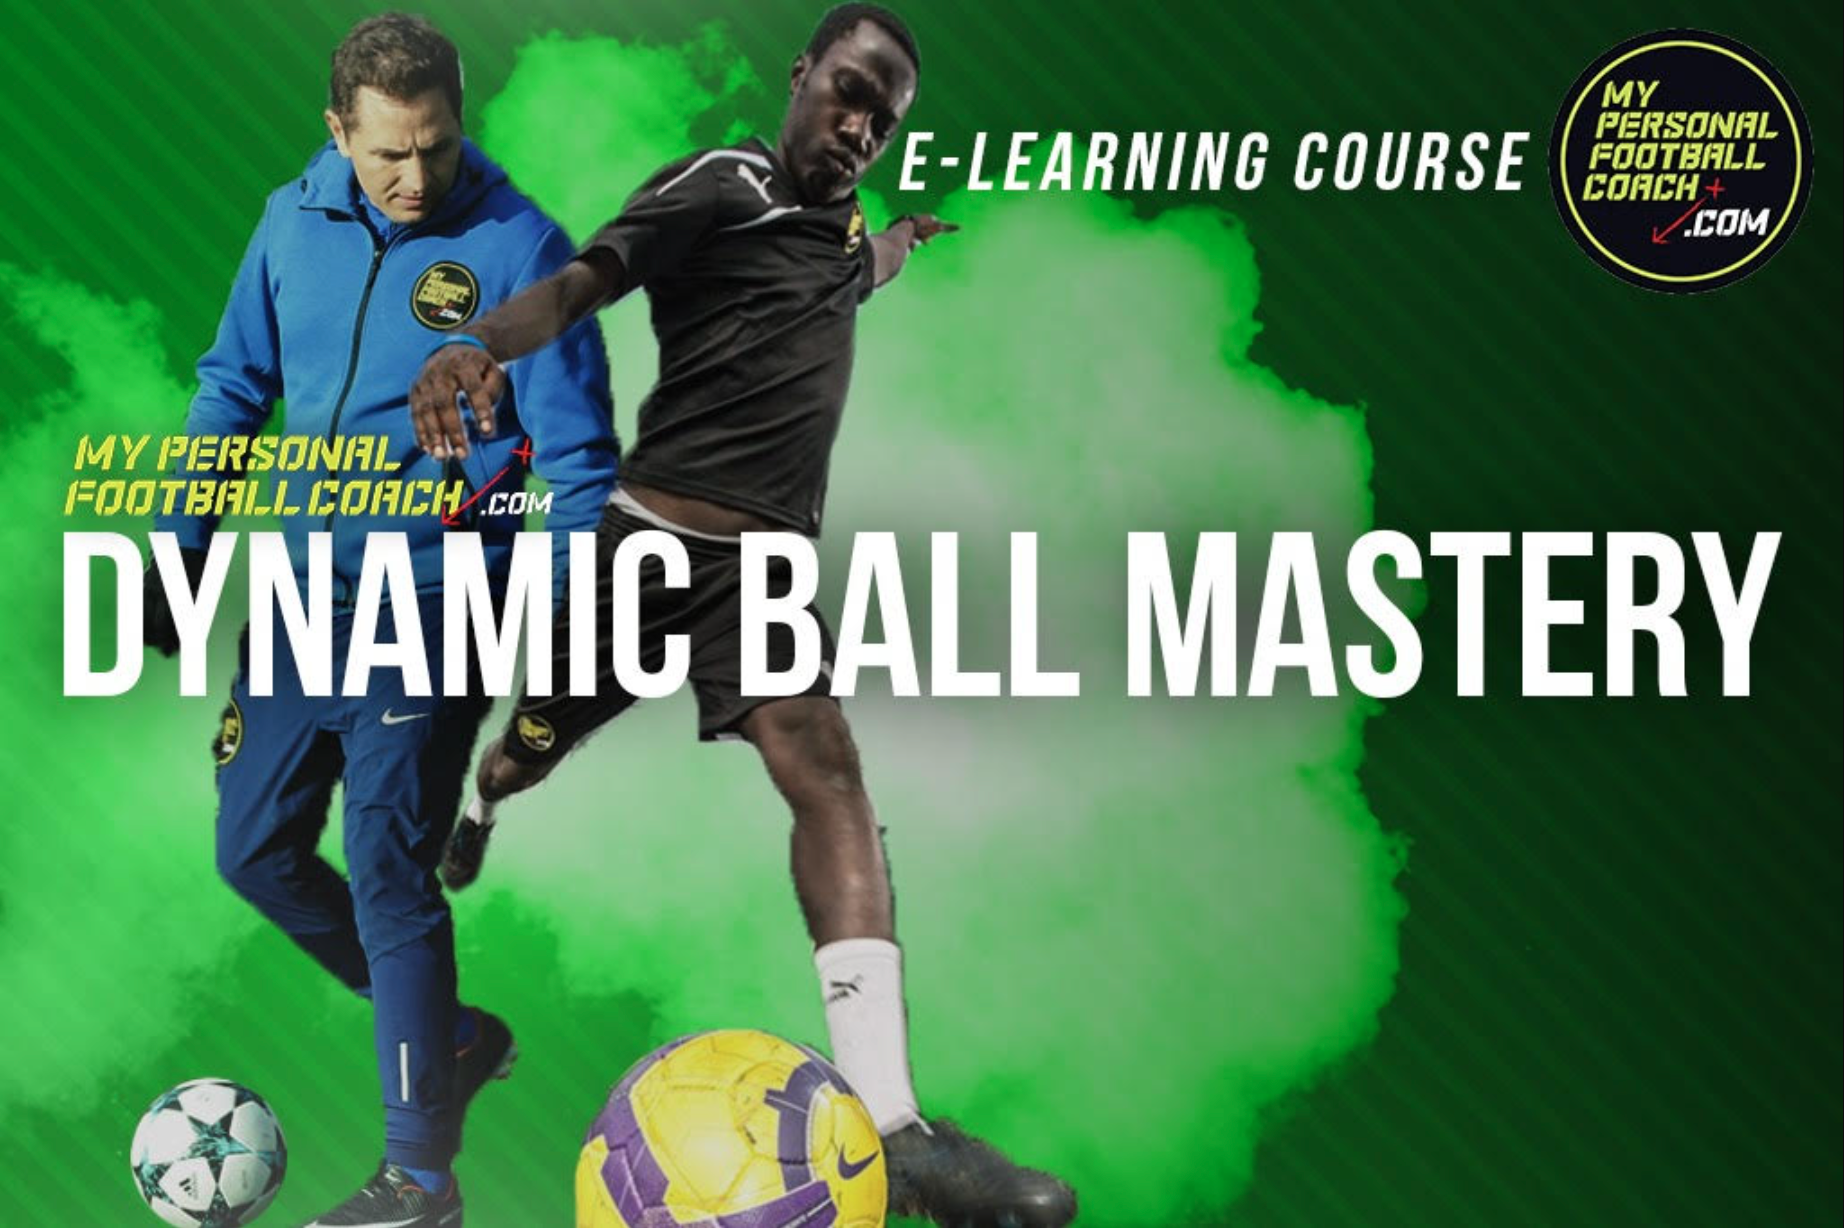 Soccer Ball Mastery Mat and Training Program